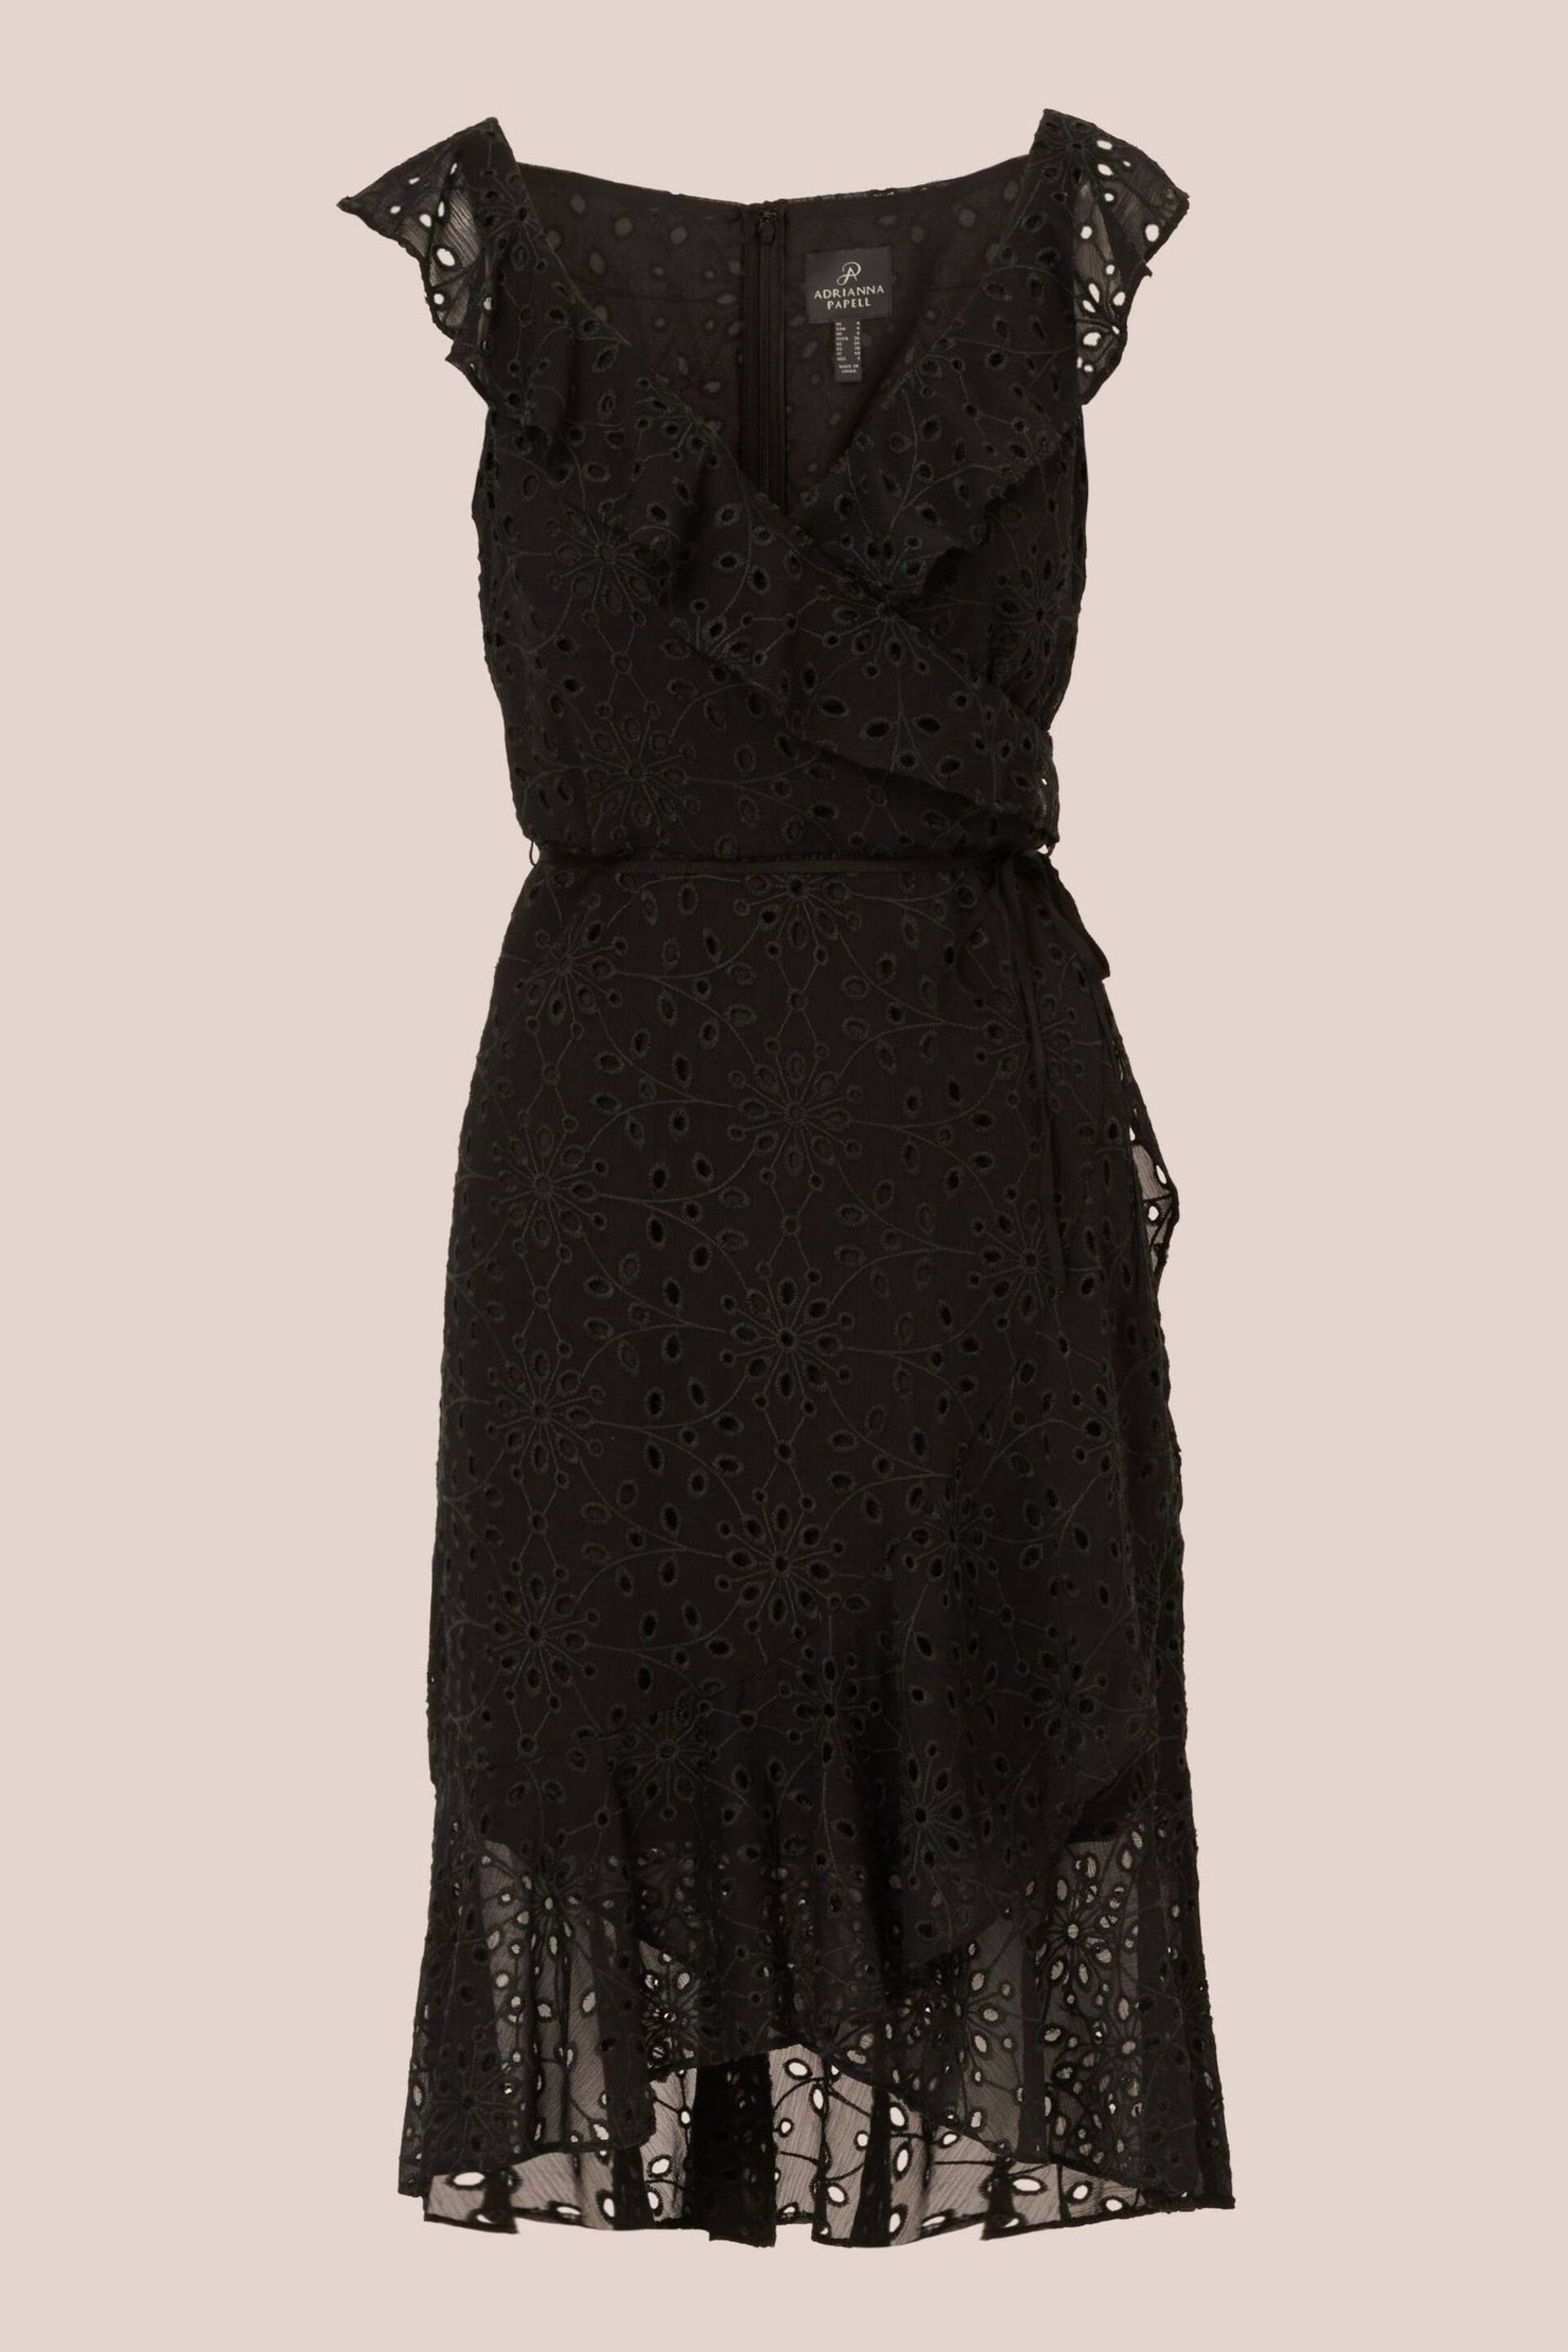 Adrianna Papell Ruffle Midi Black Dress - Image 6 of 7